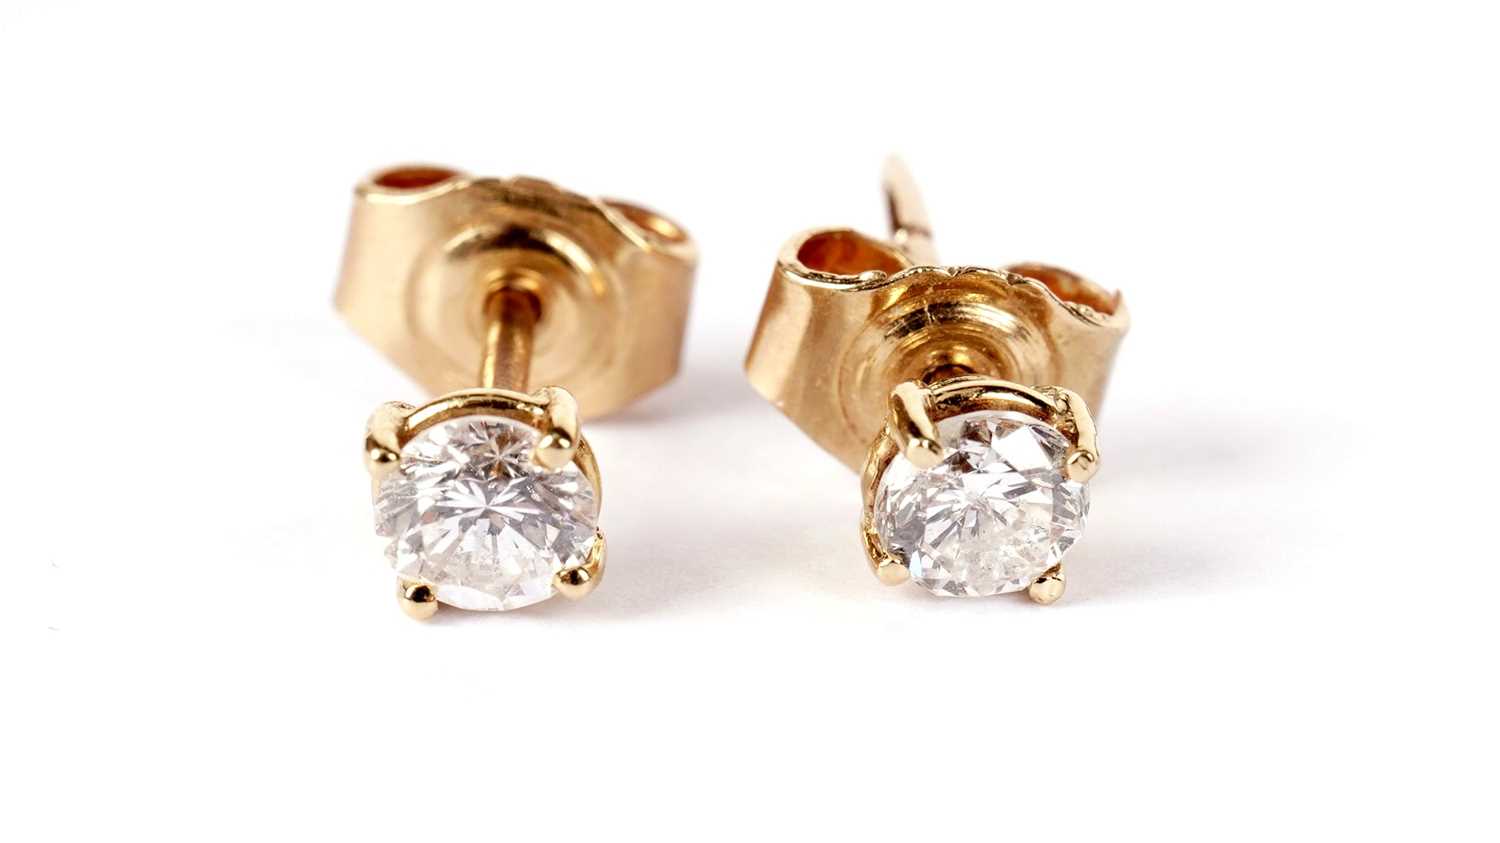 A pair of diamond stud earrings - Image 3 of 4